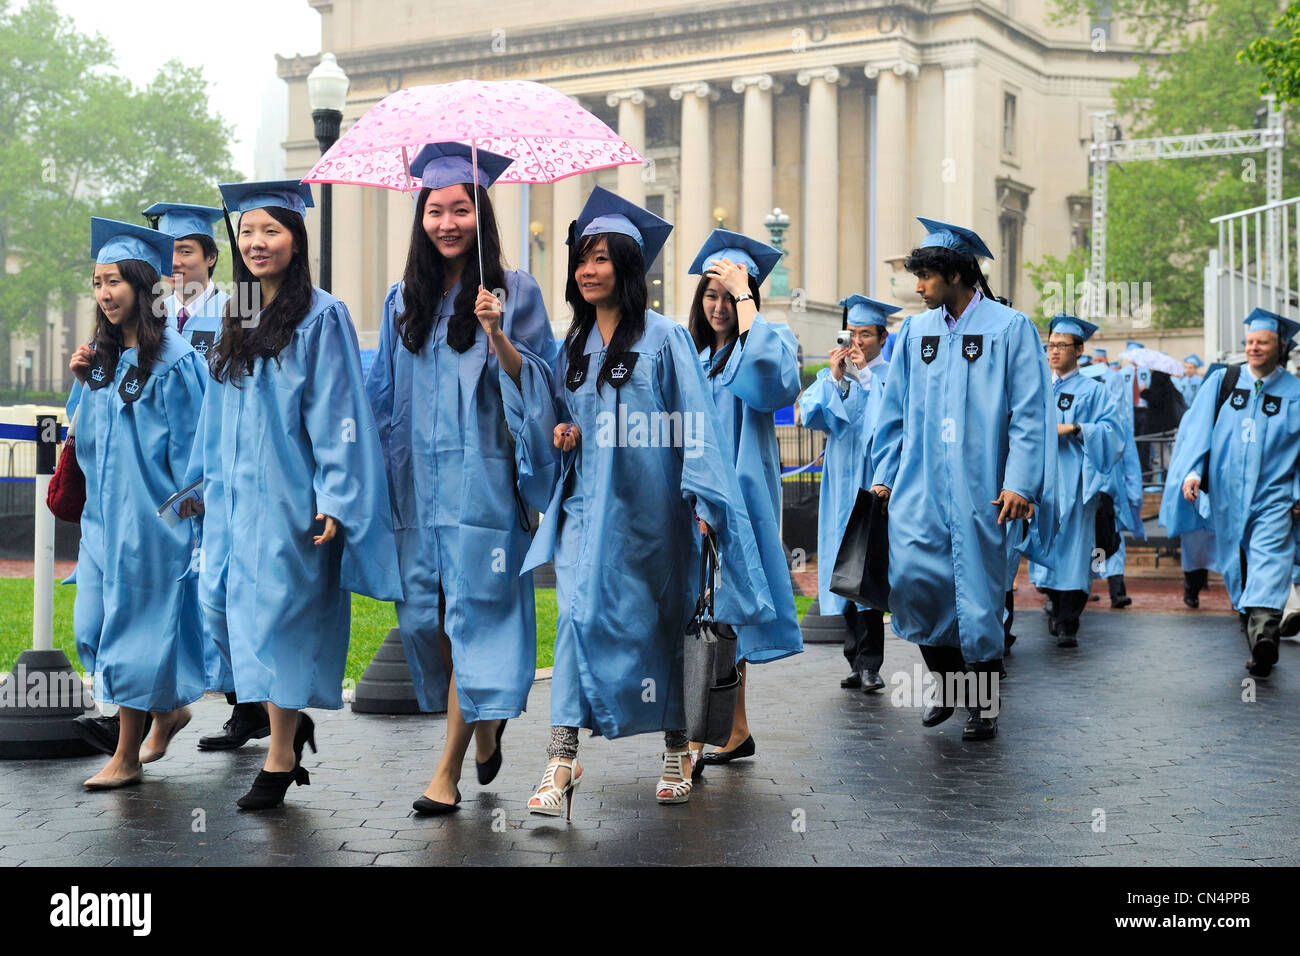 Columbia university graduation hi-res stock photography and images - Alamy